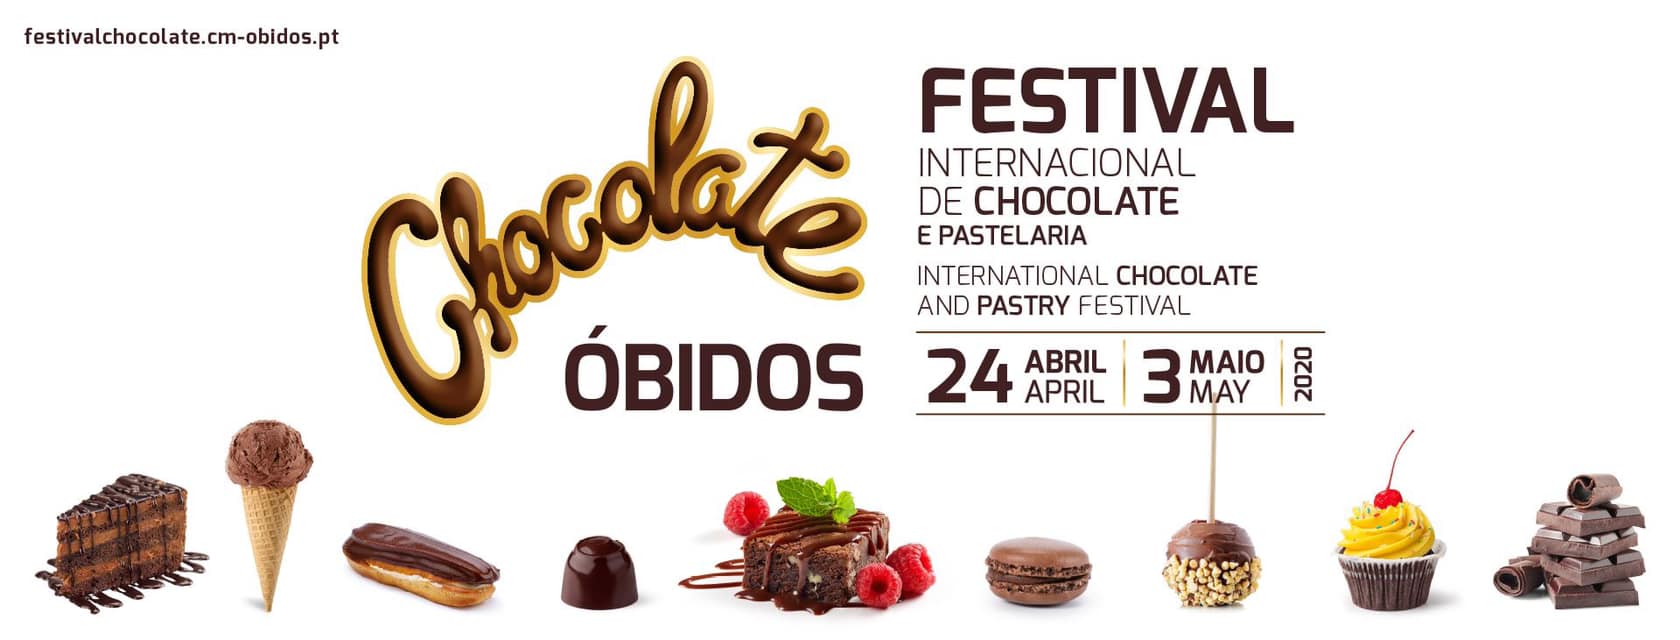 Chocolate Festival in Óbidos